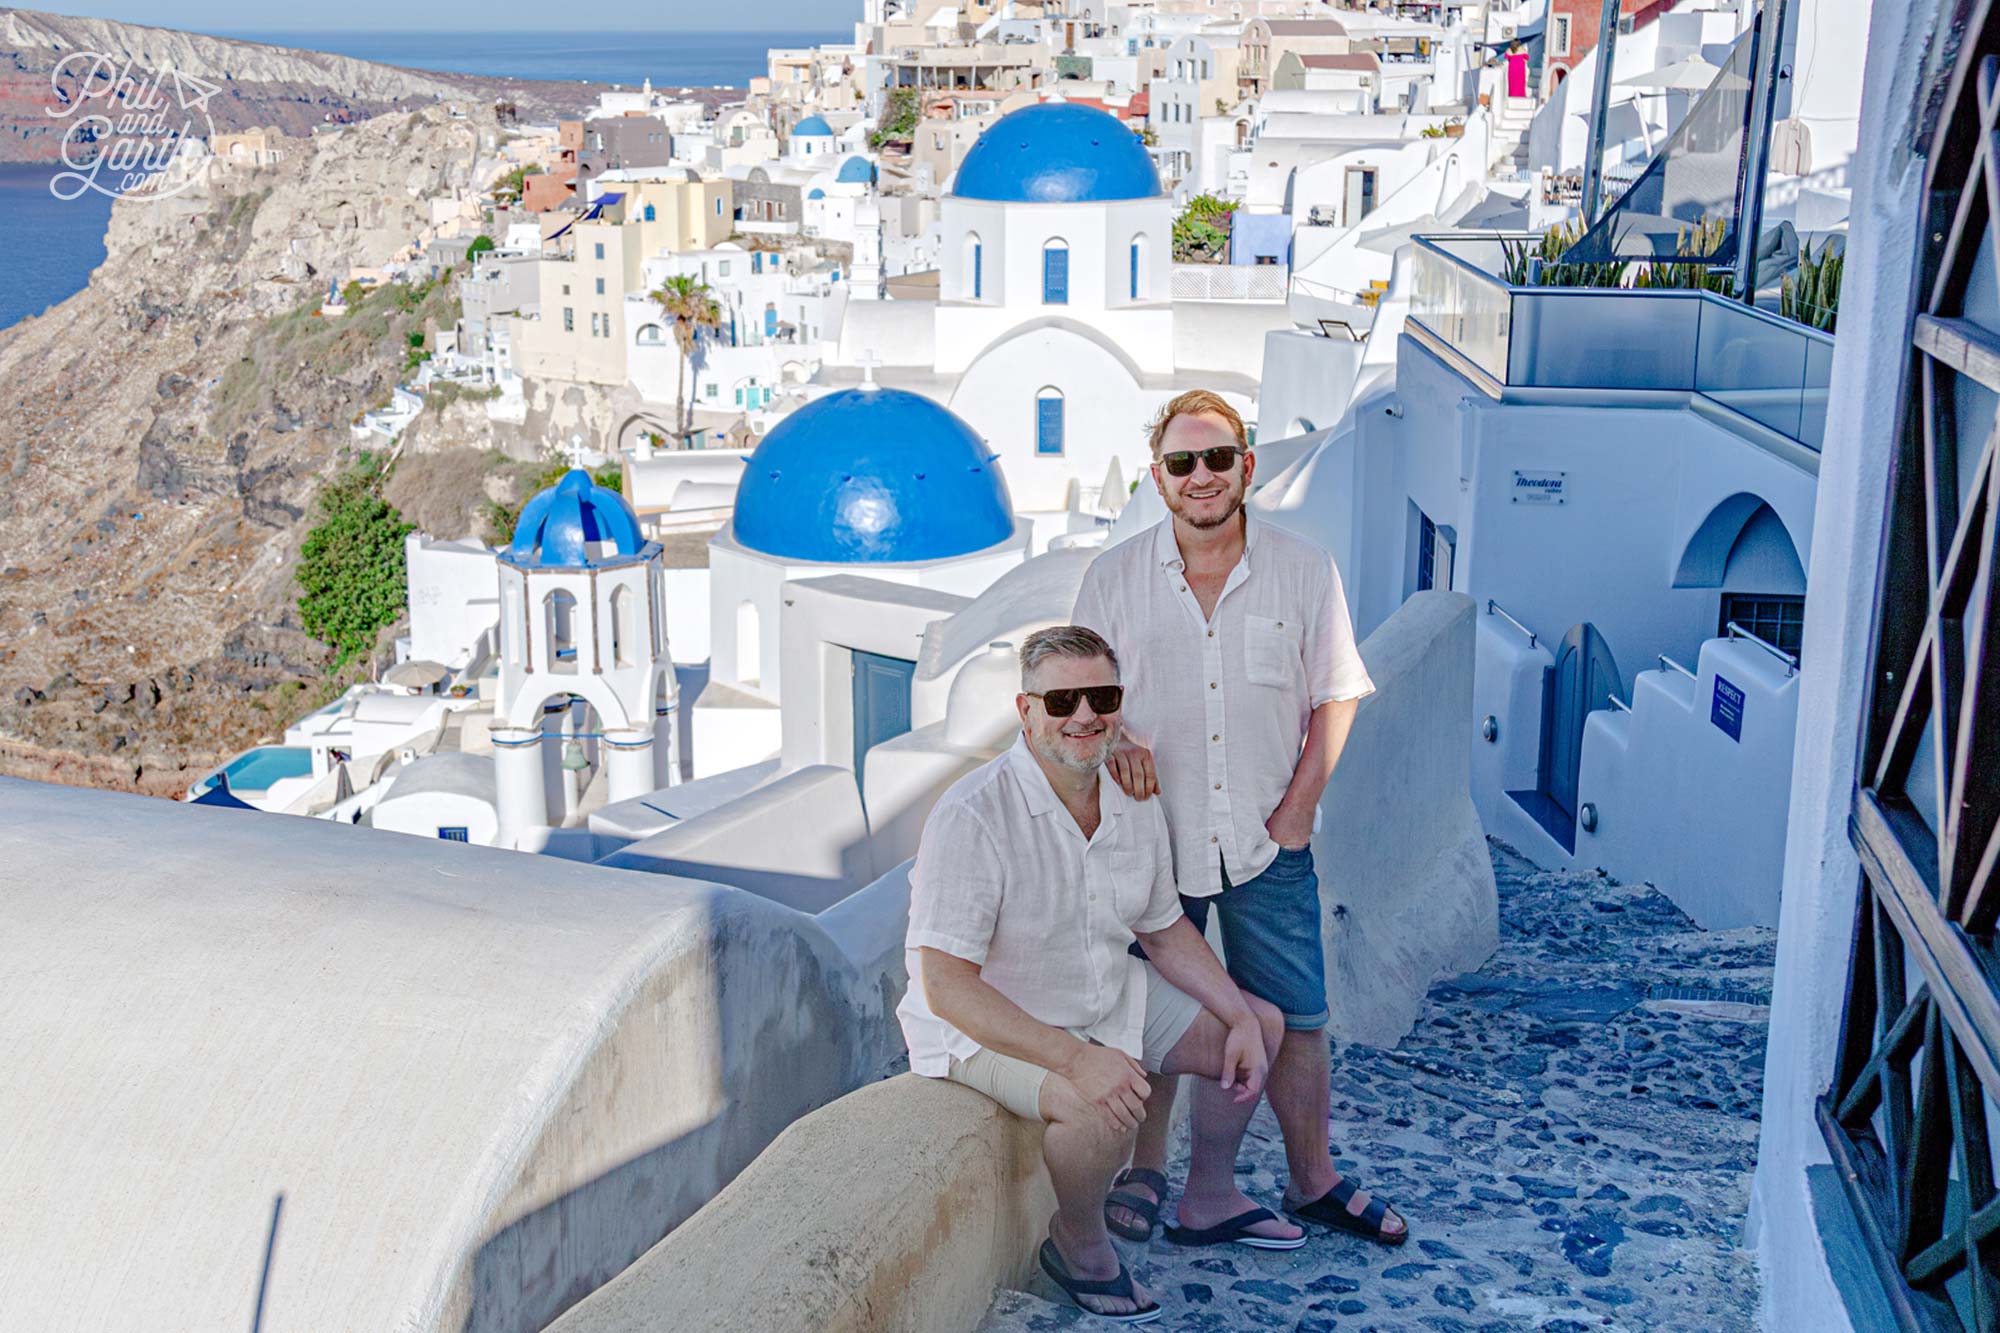 Santorini Instagram Spots: The iconic photograph of Santorini - the blue domes of Oia